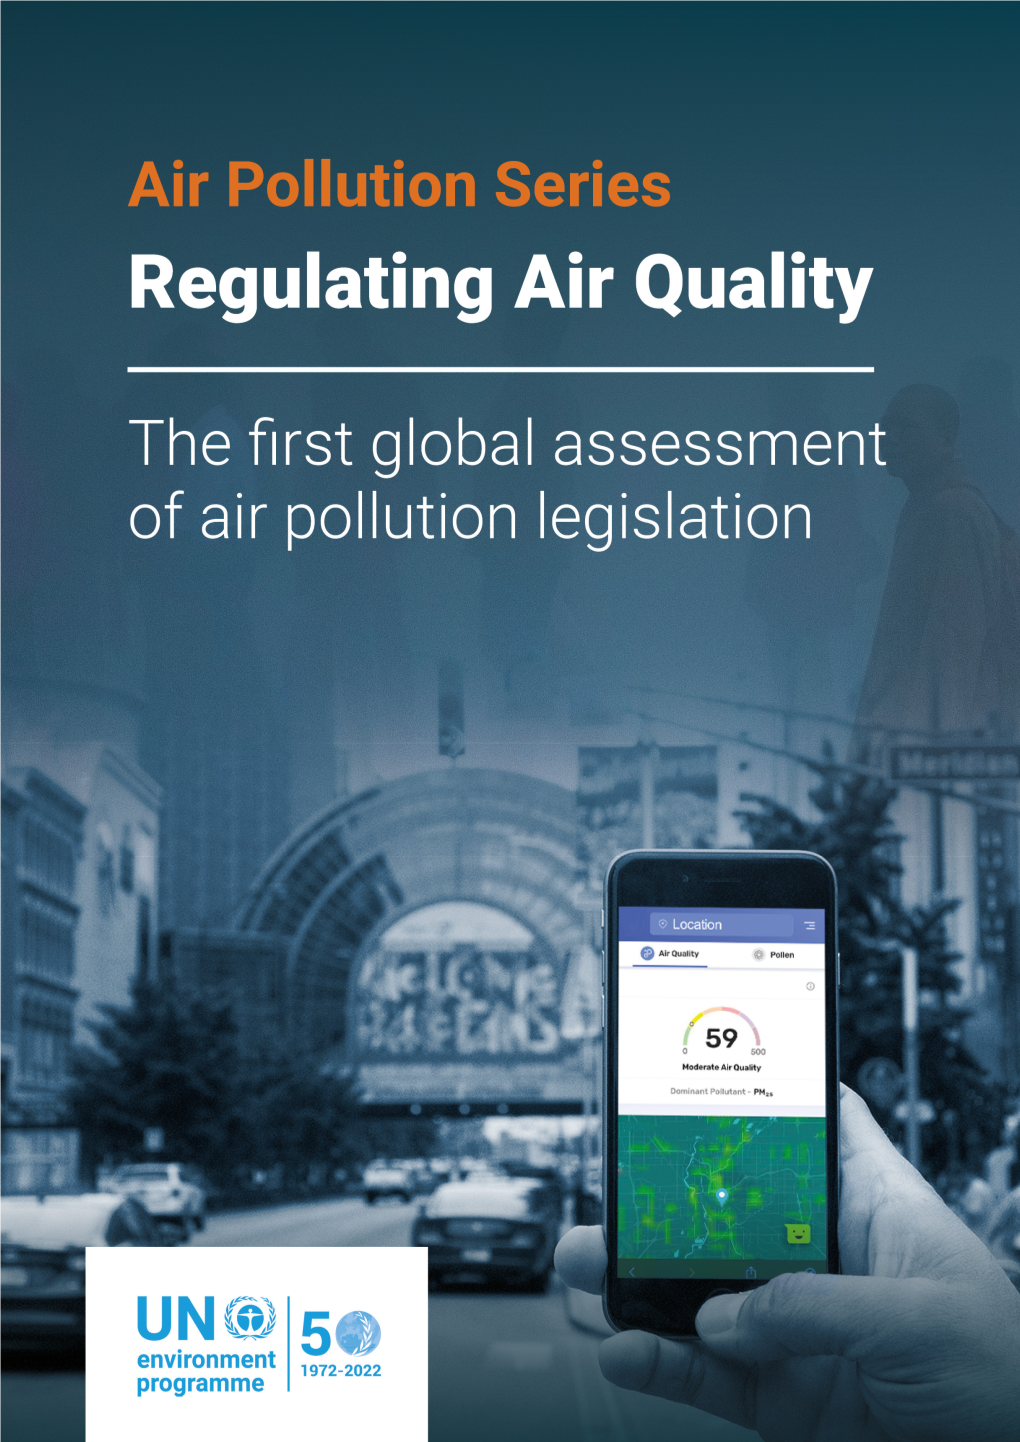 Global Assessment of Air Pollution Legislation